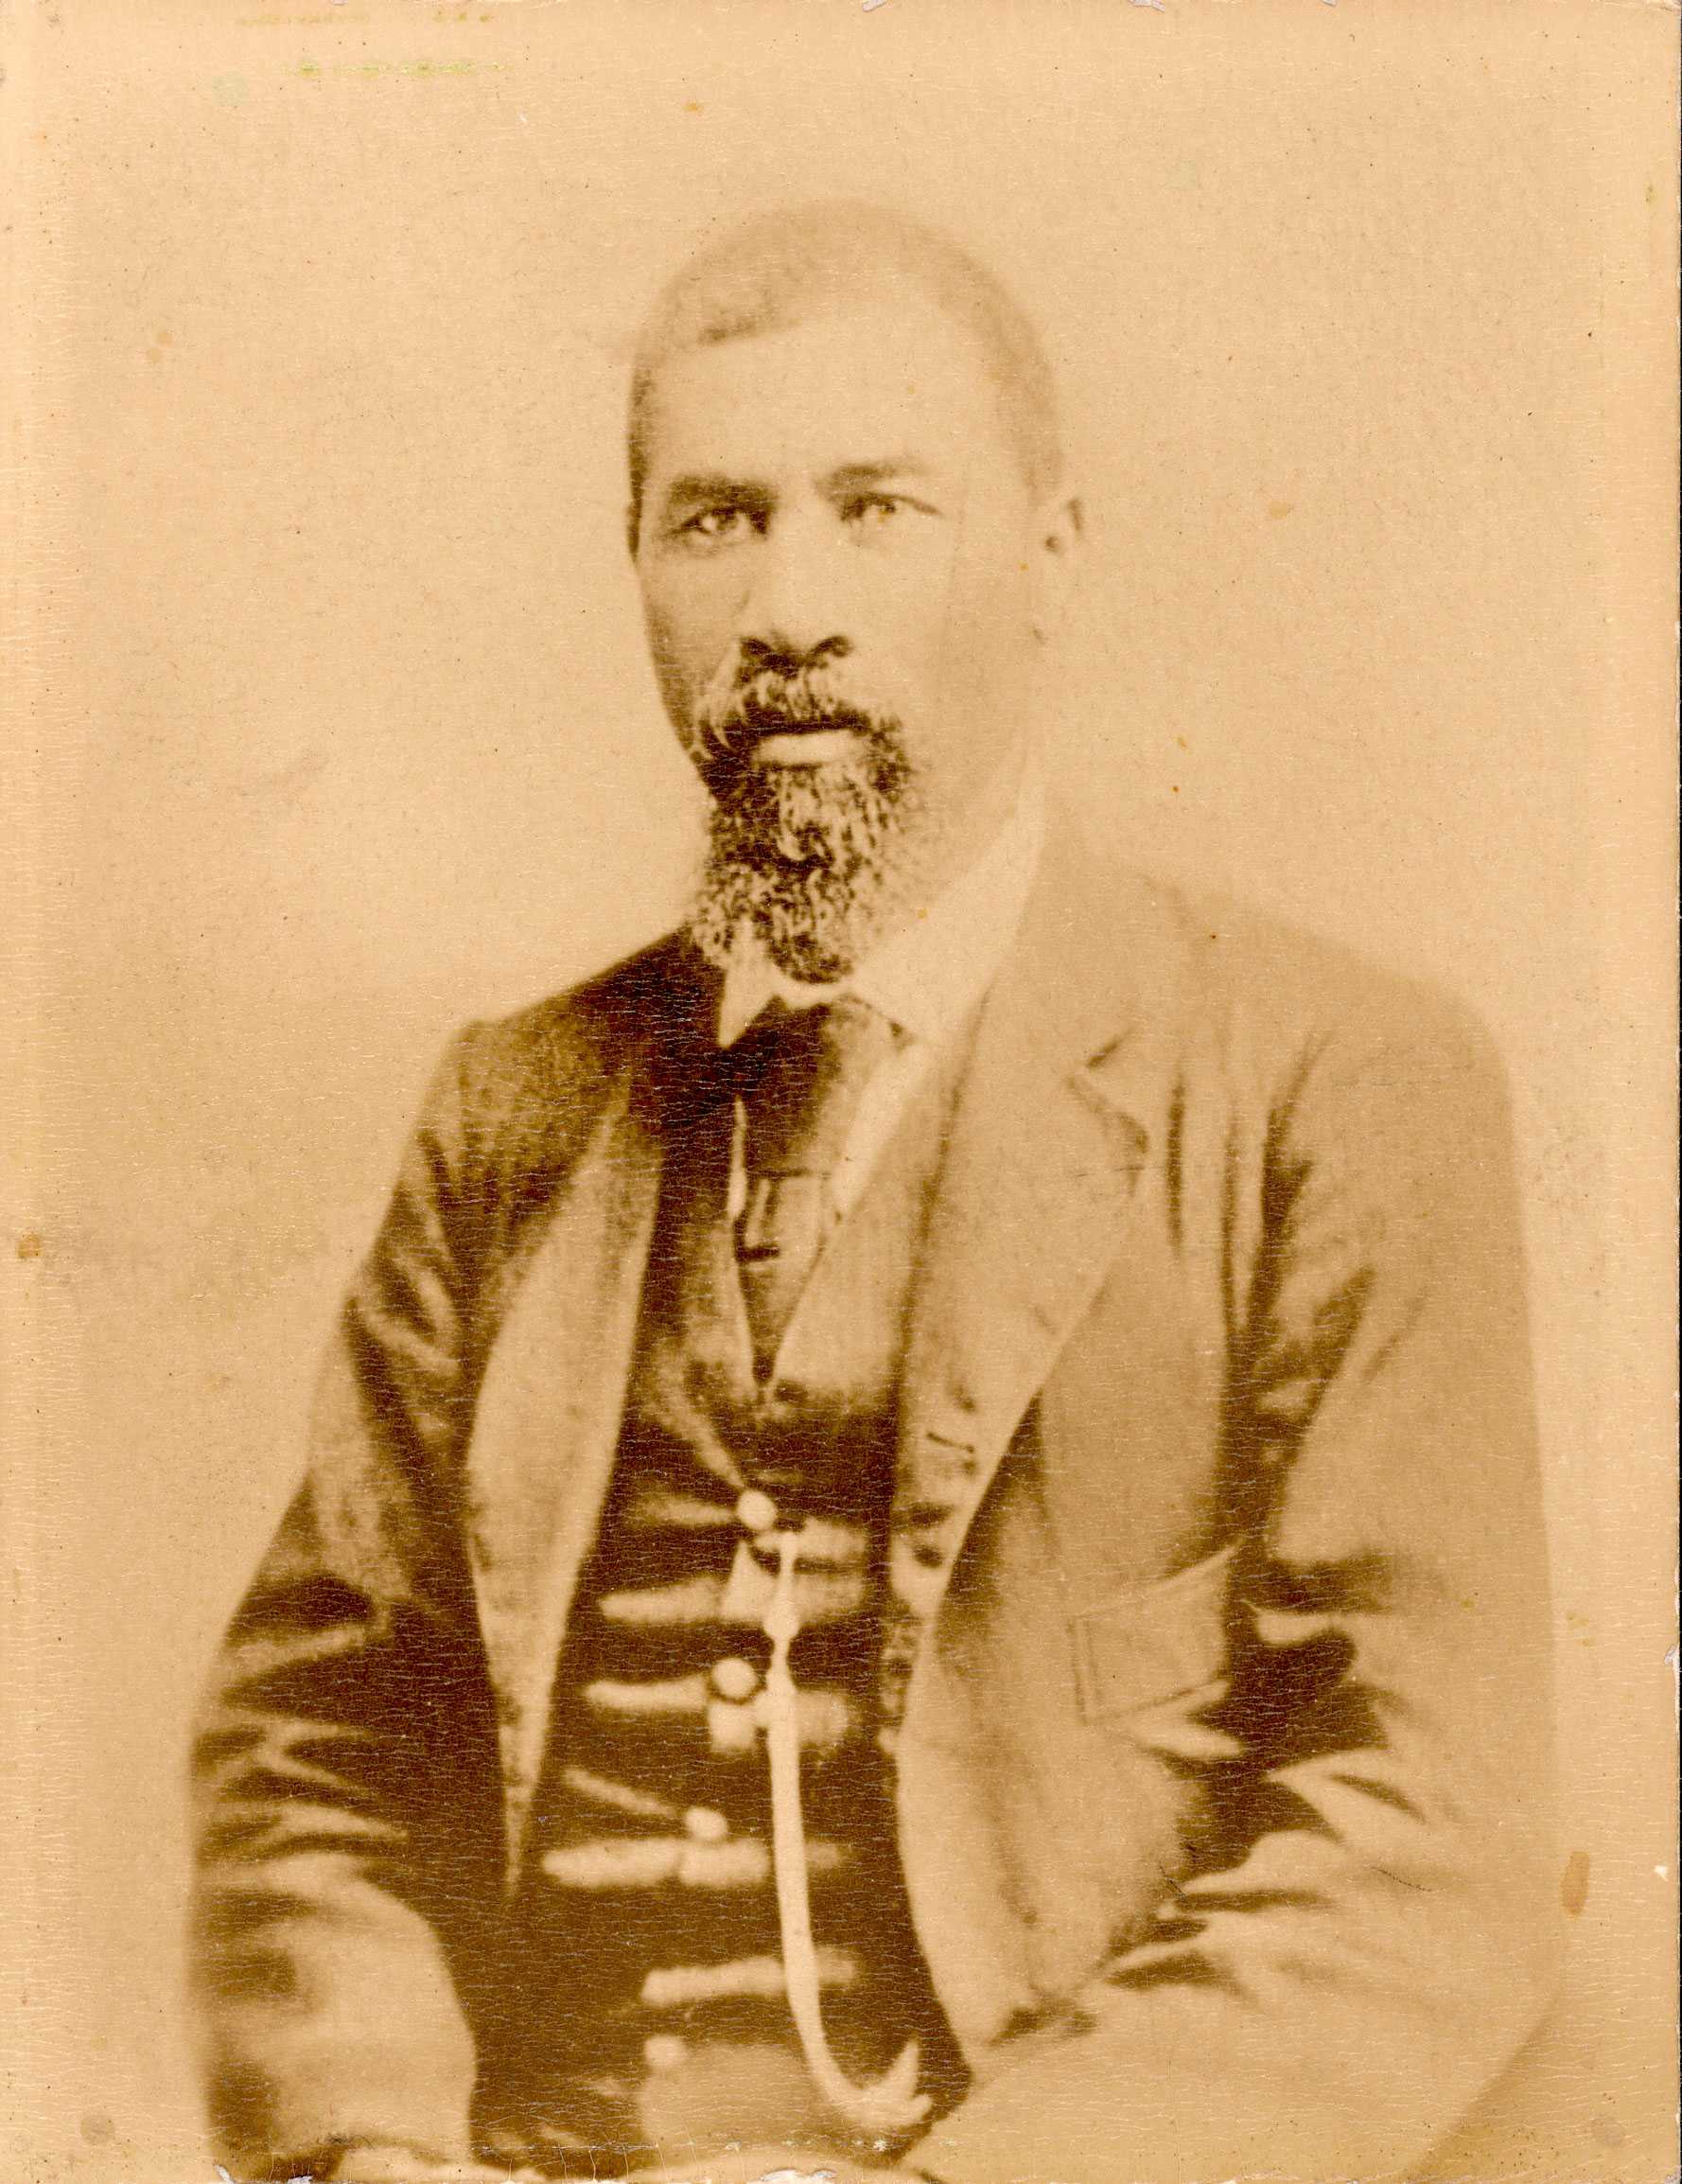 Sepia toned photograph of a Nelson W. Jordan